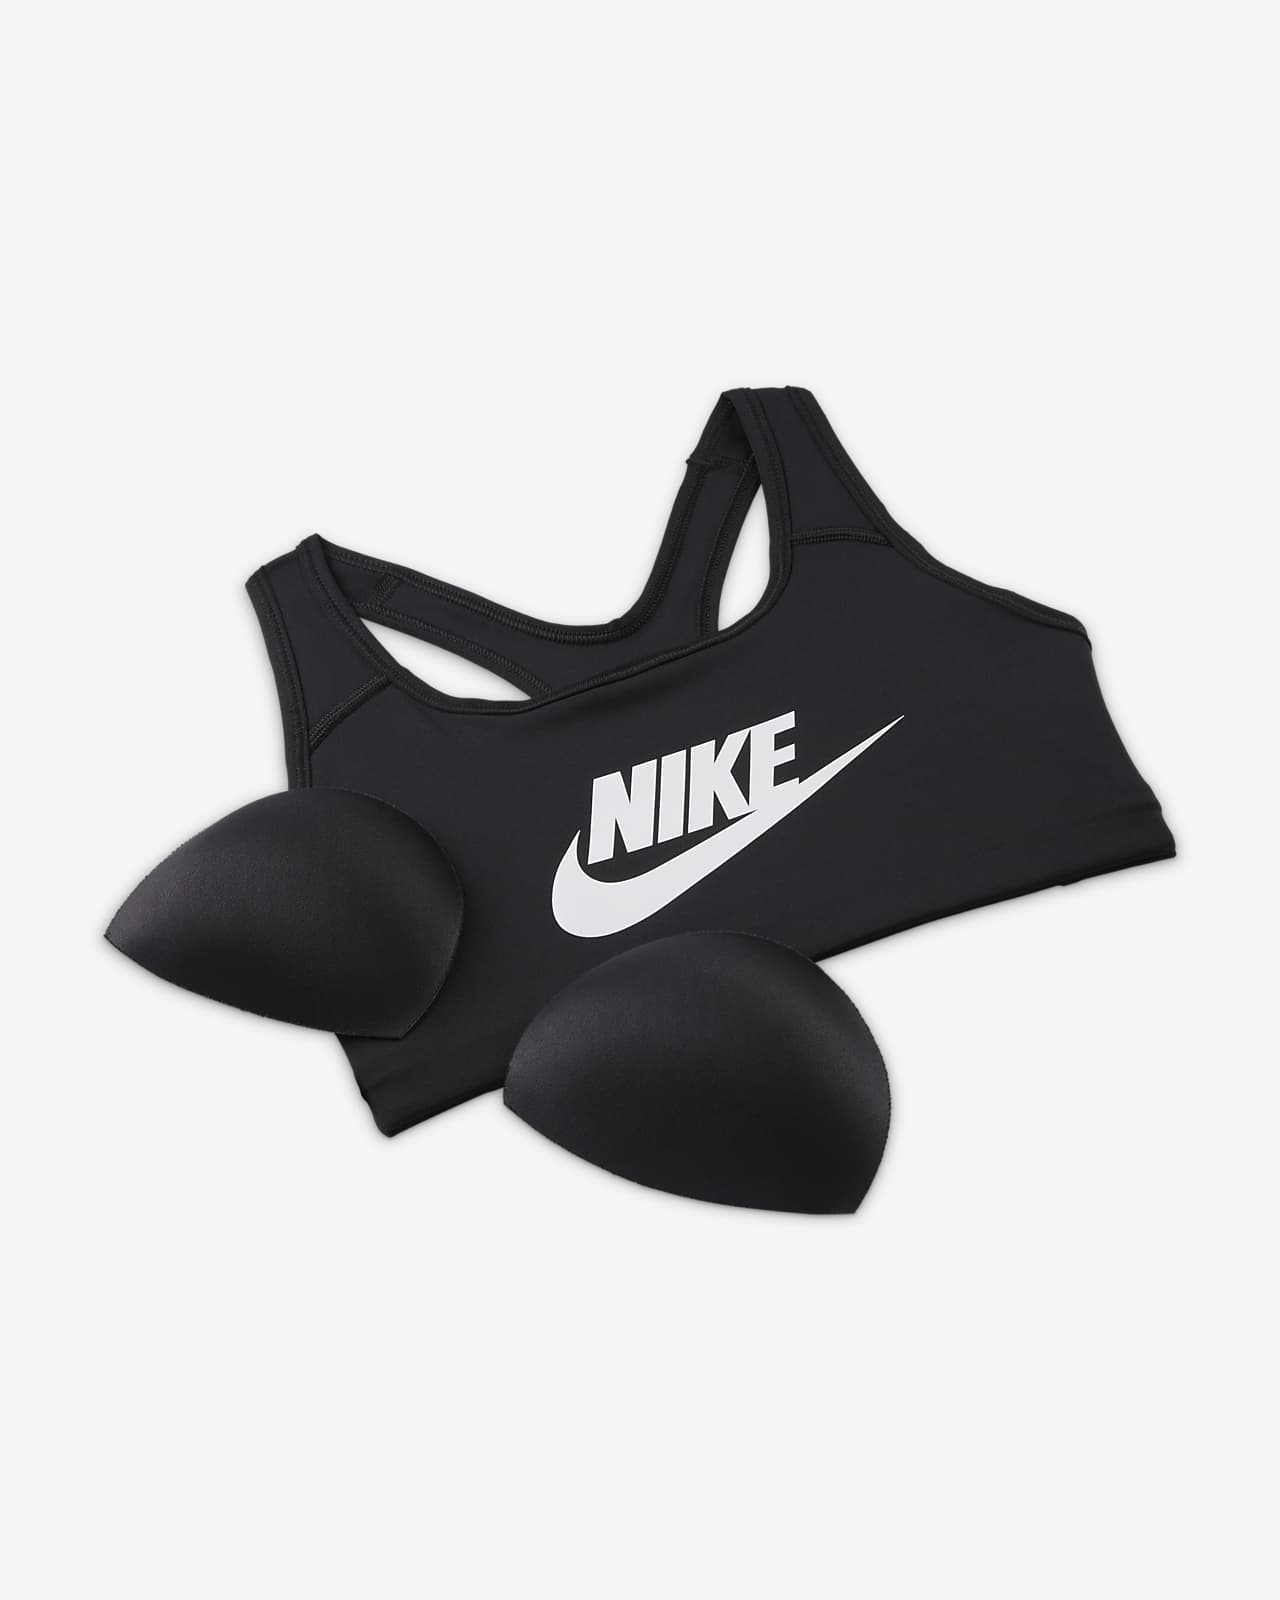 Nike Swoosh Futura Black